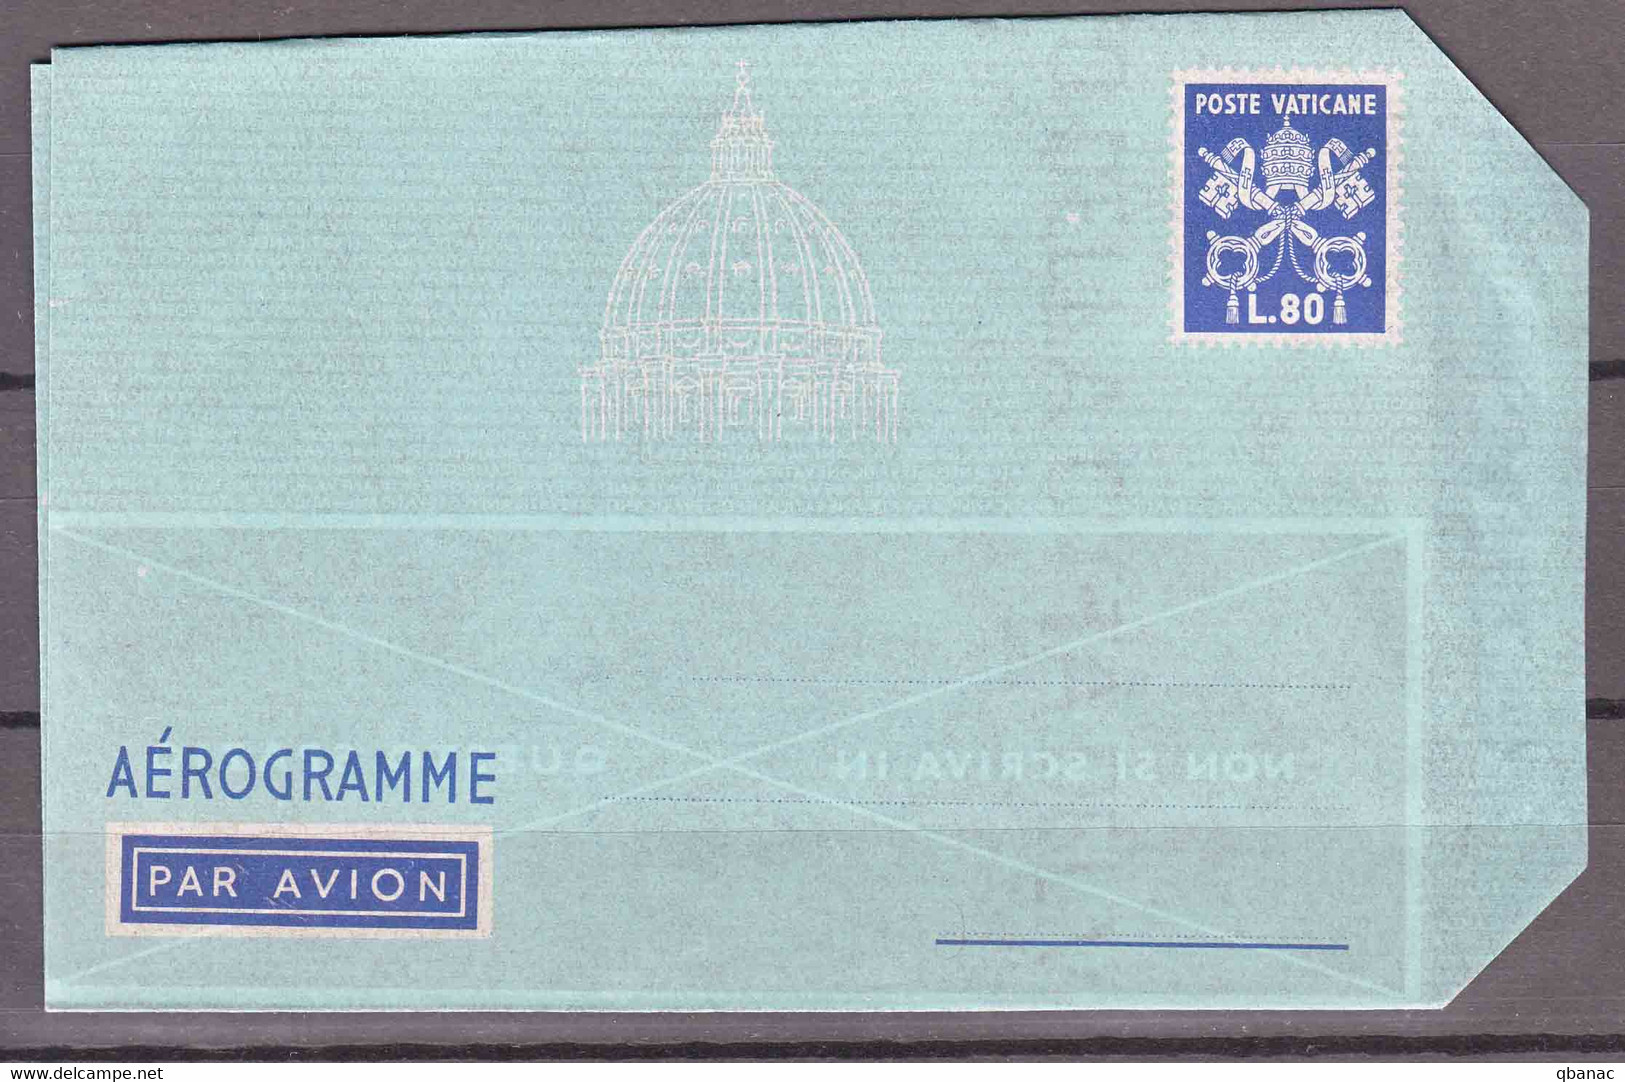 Vatican Aerogramme, Aerogramma 80 Lire Scott#LF6 Watermark Variety, Value 200 Eur - Interi Postali